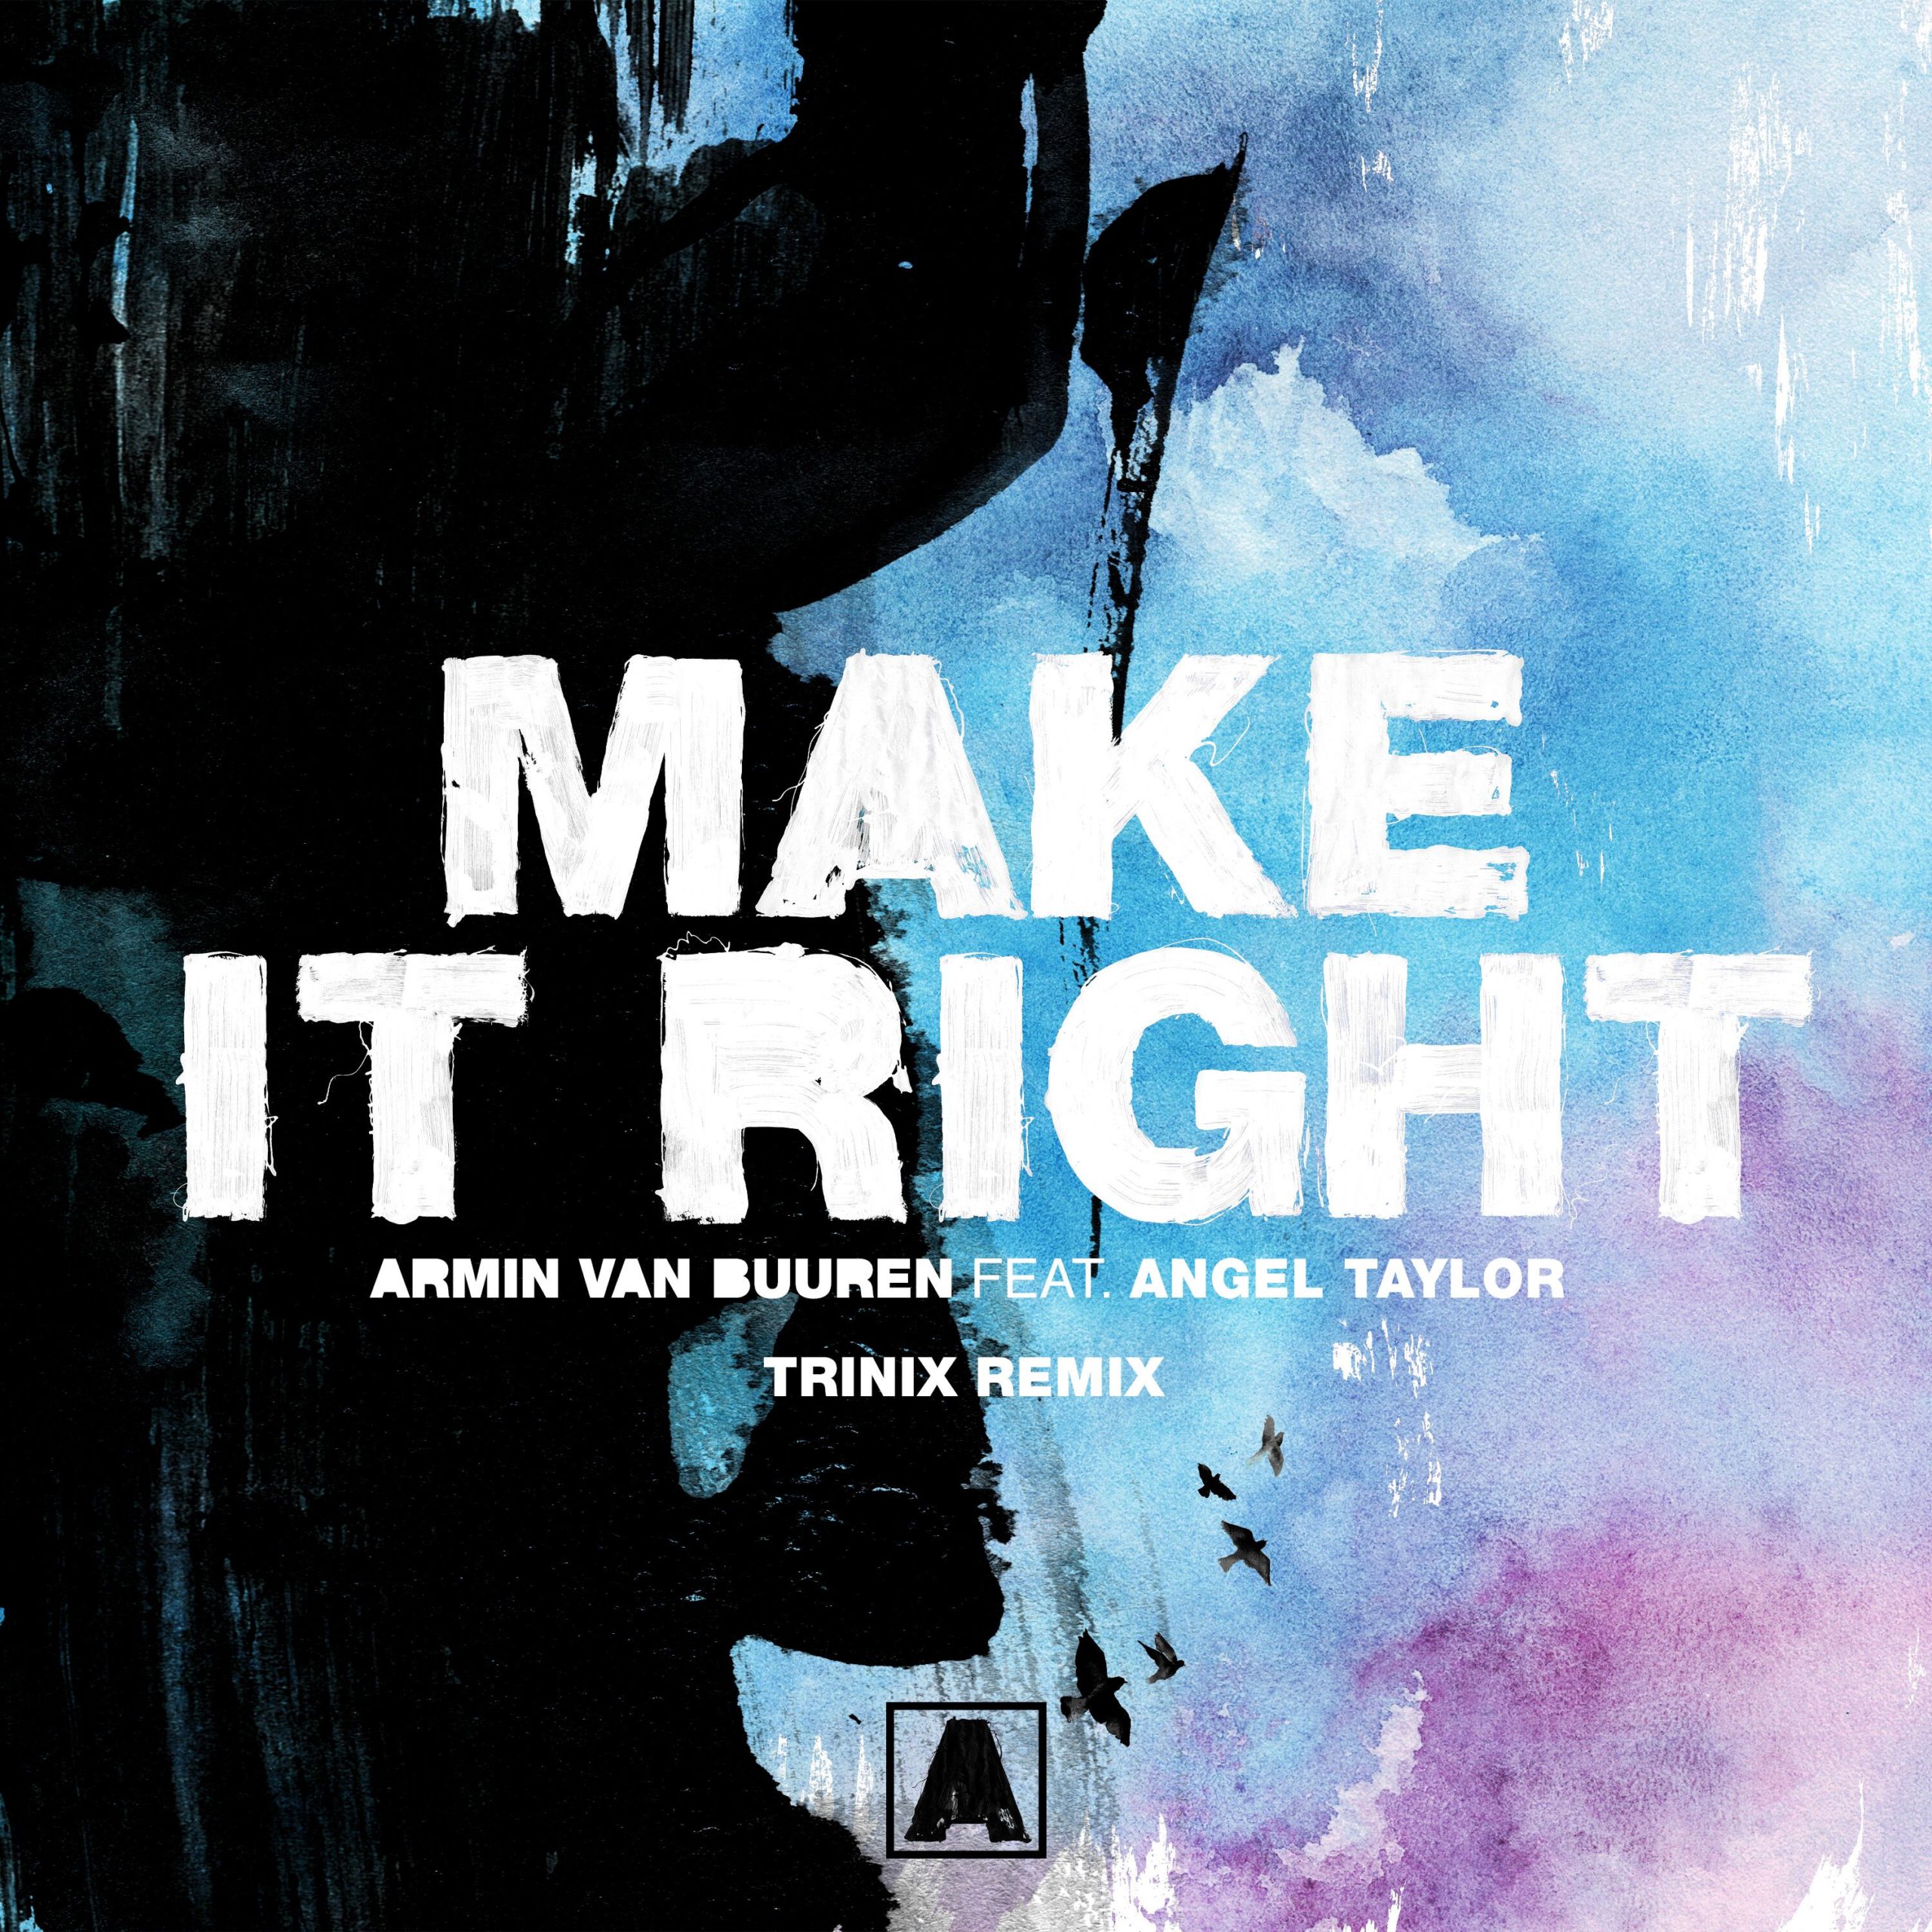 Armin van Buuren feat. Angel Taylor presents Make It Right (Trinix Remix) on Armada Music